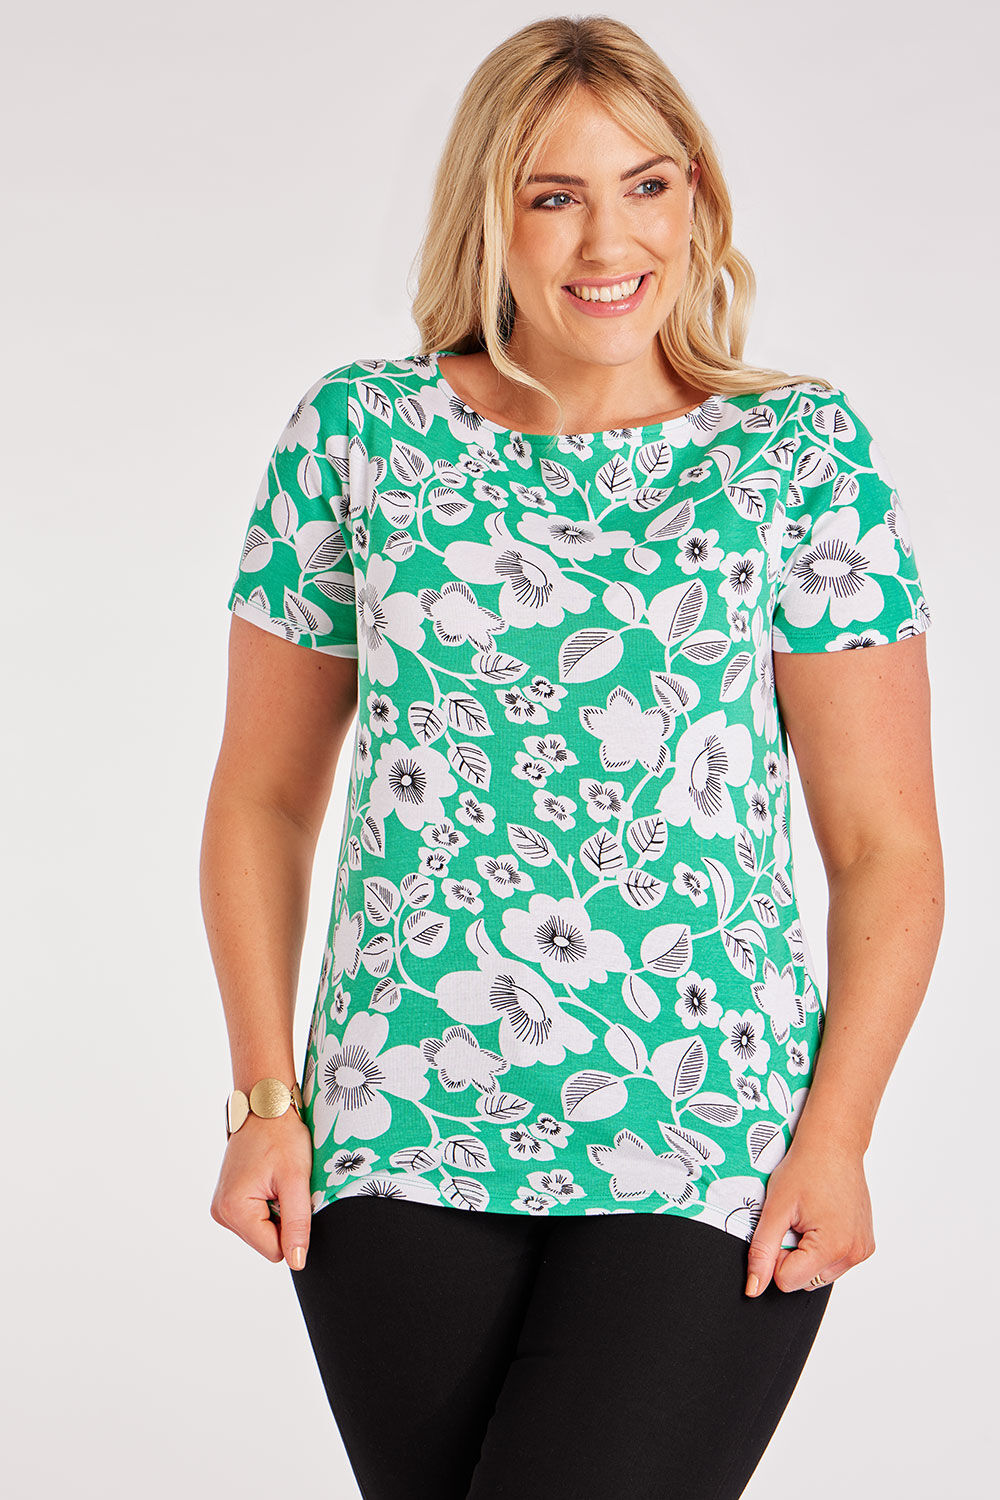 Bonmarche Women’s Green Cotton Floral Stylish Short Sleeve Retro Boat Neck T-Shirt, Size: 10